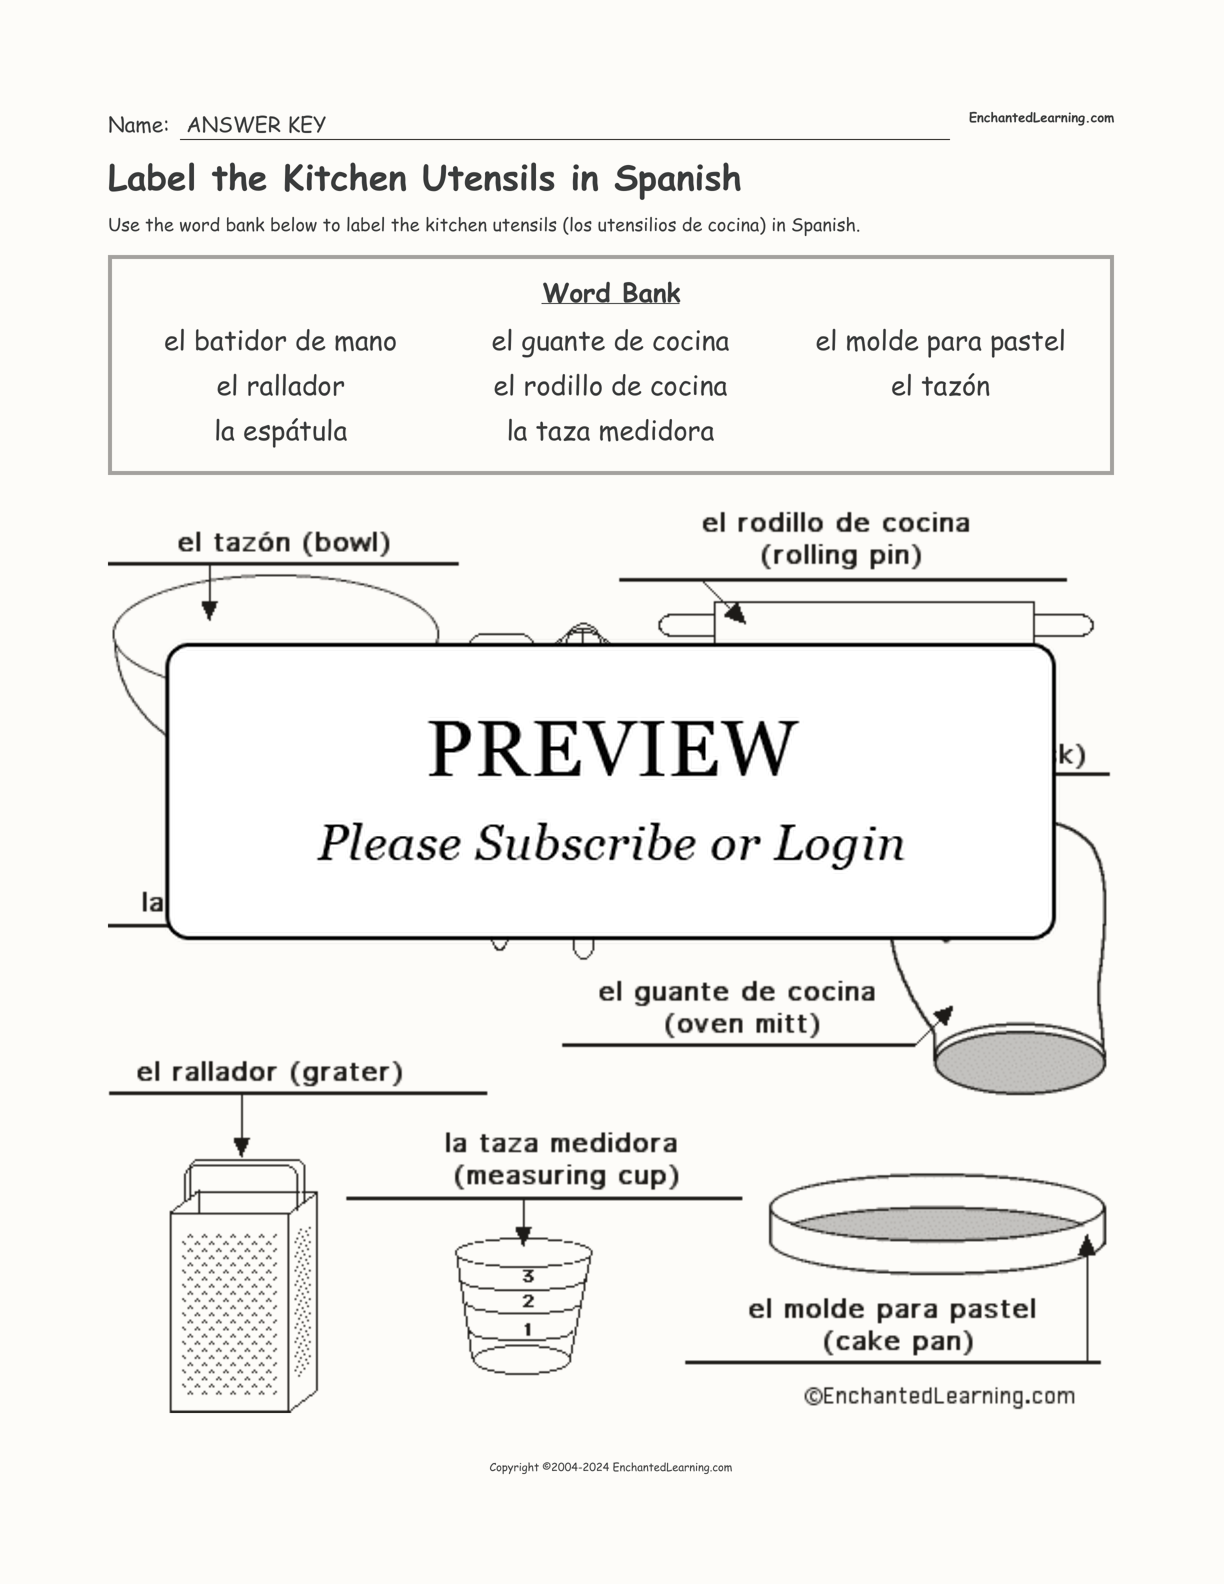 Label the Kitchen Utensils in Spanish interactive worksheet page 2